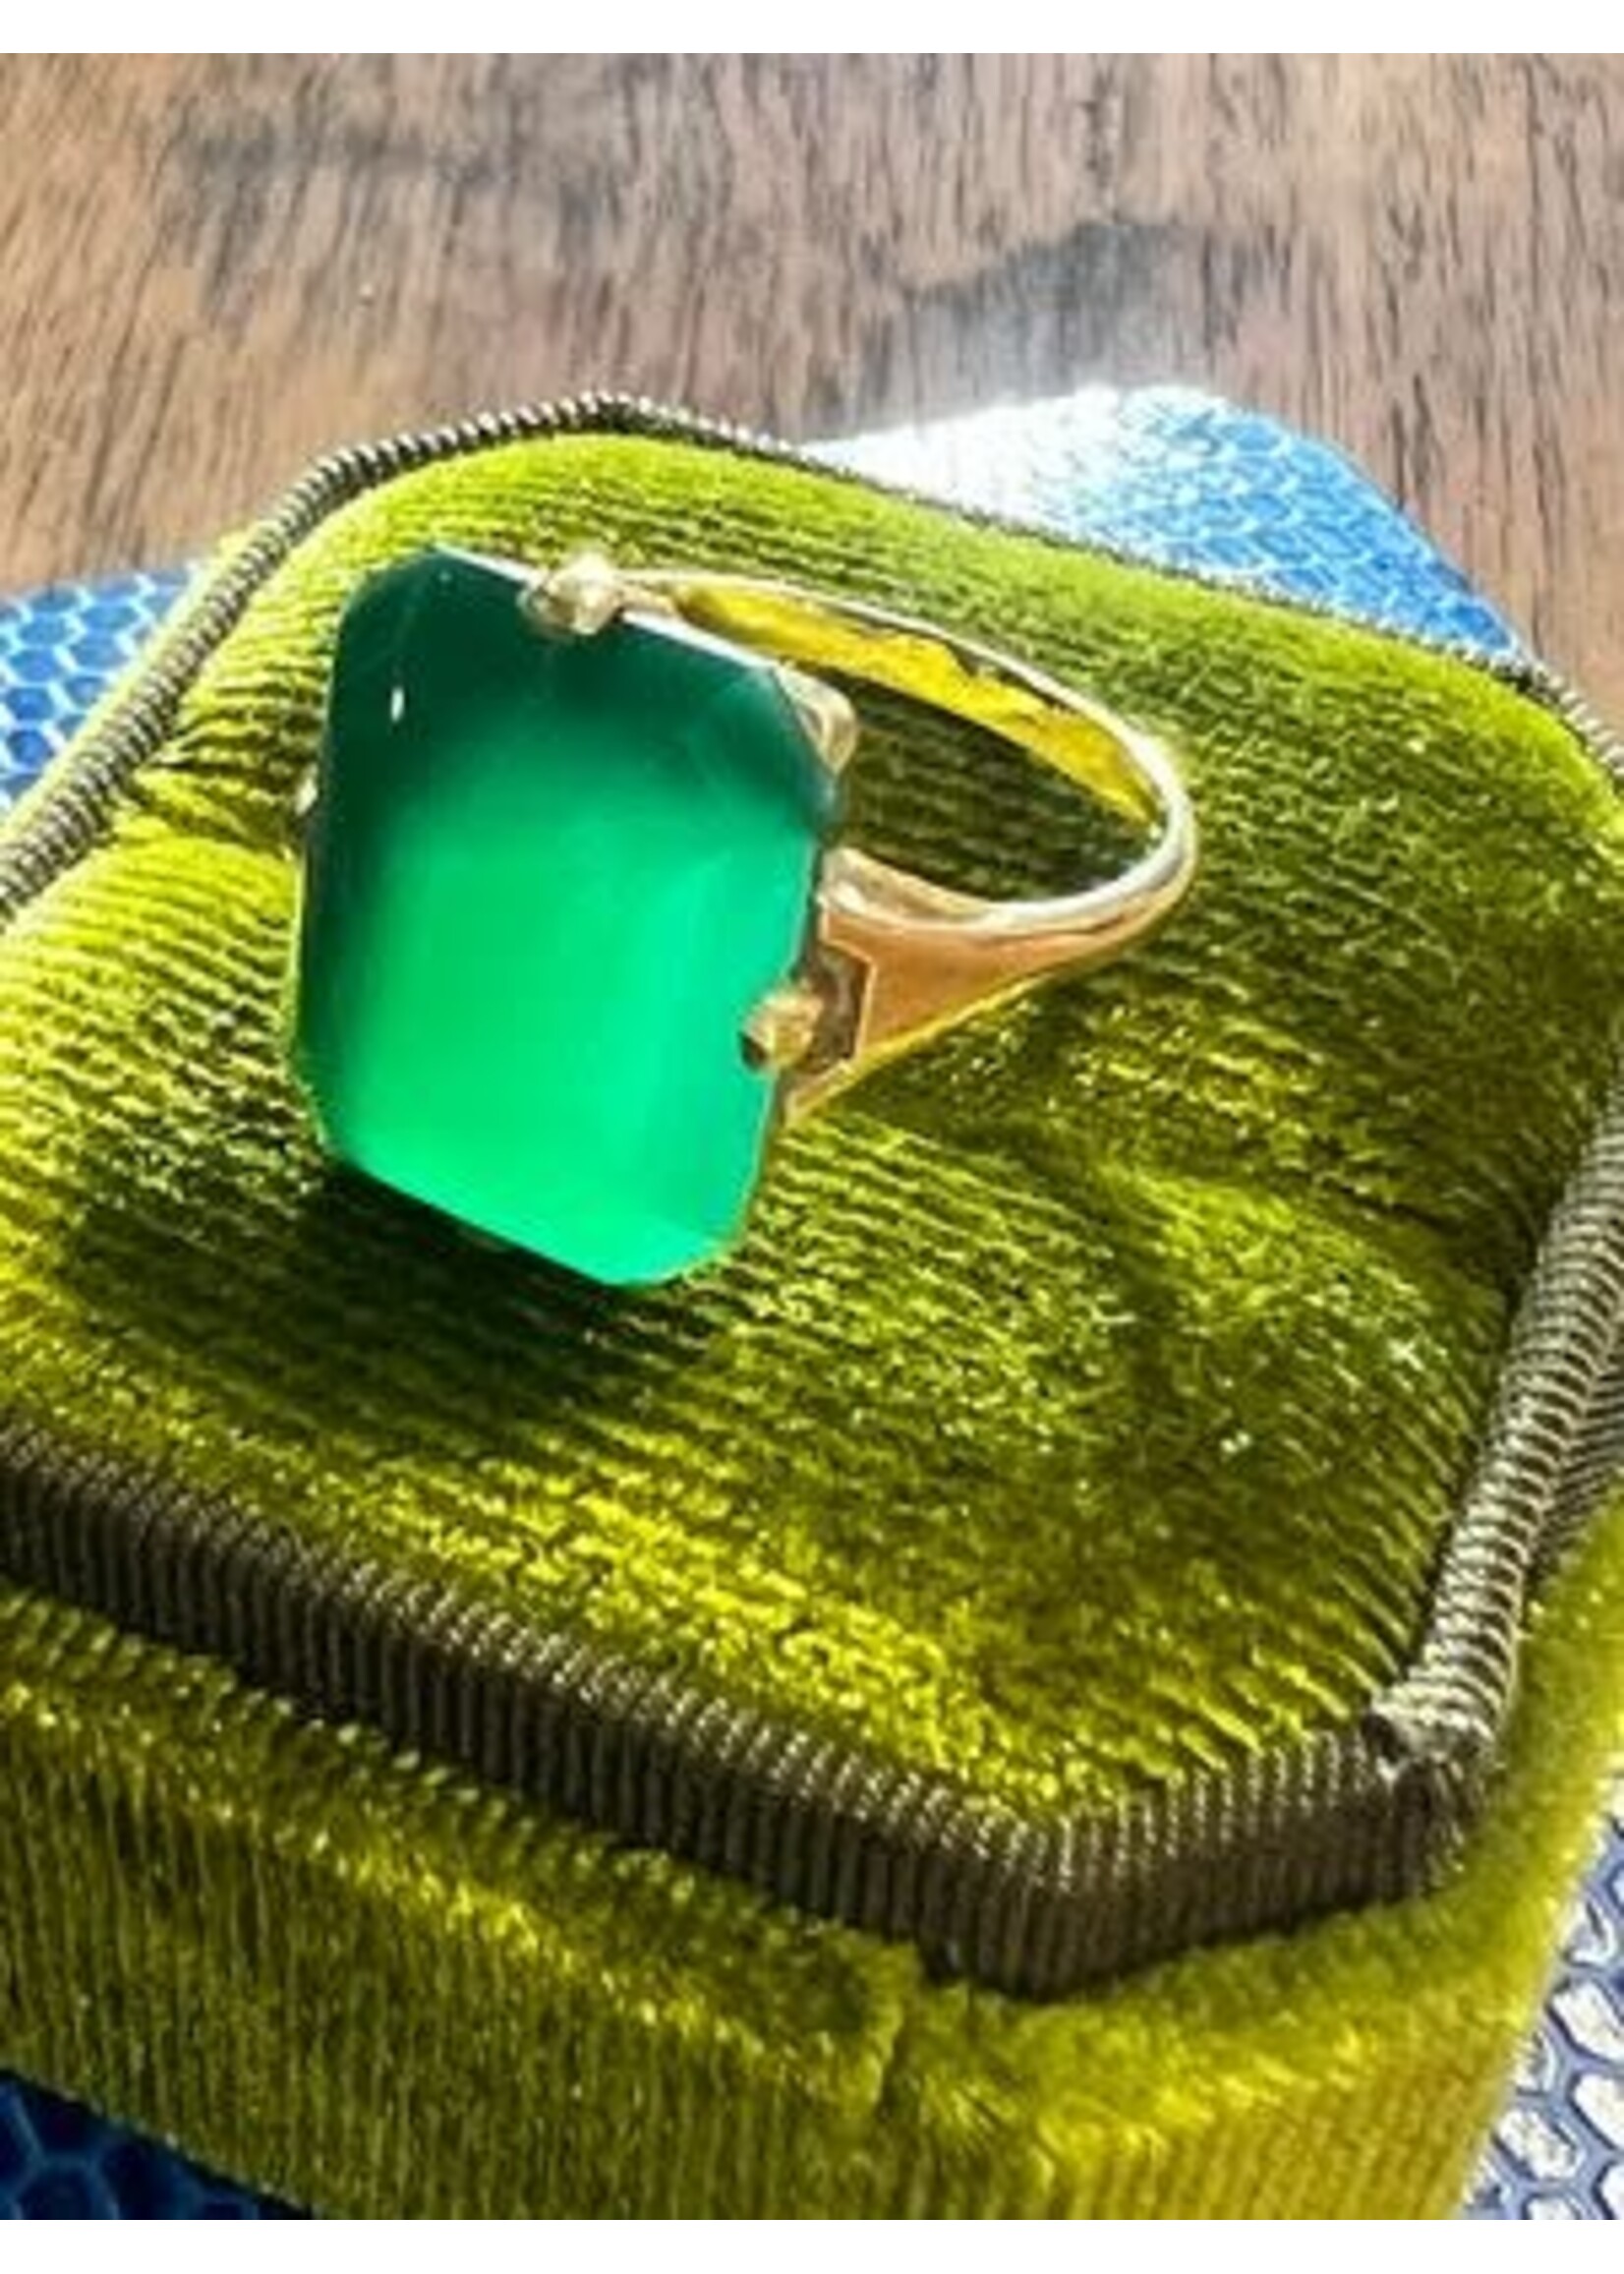 Vintage & Occasion Geelgouden ring met groene agaat edelsteen